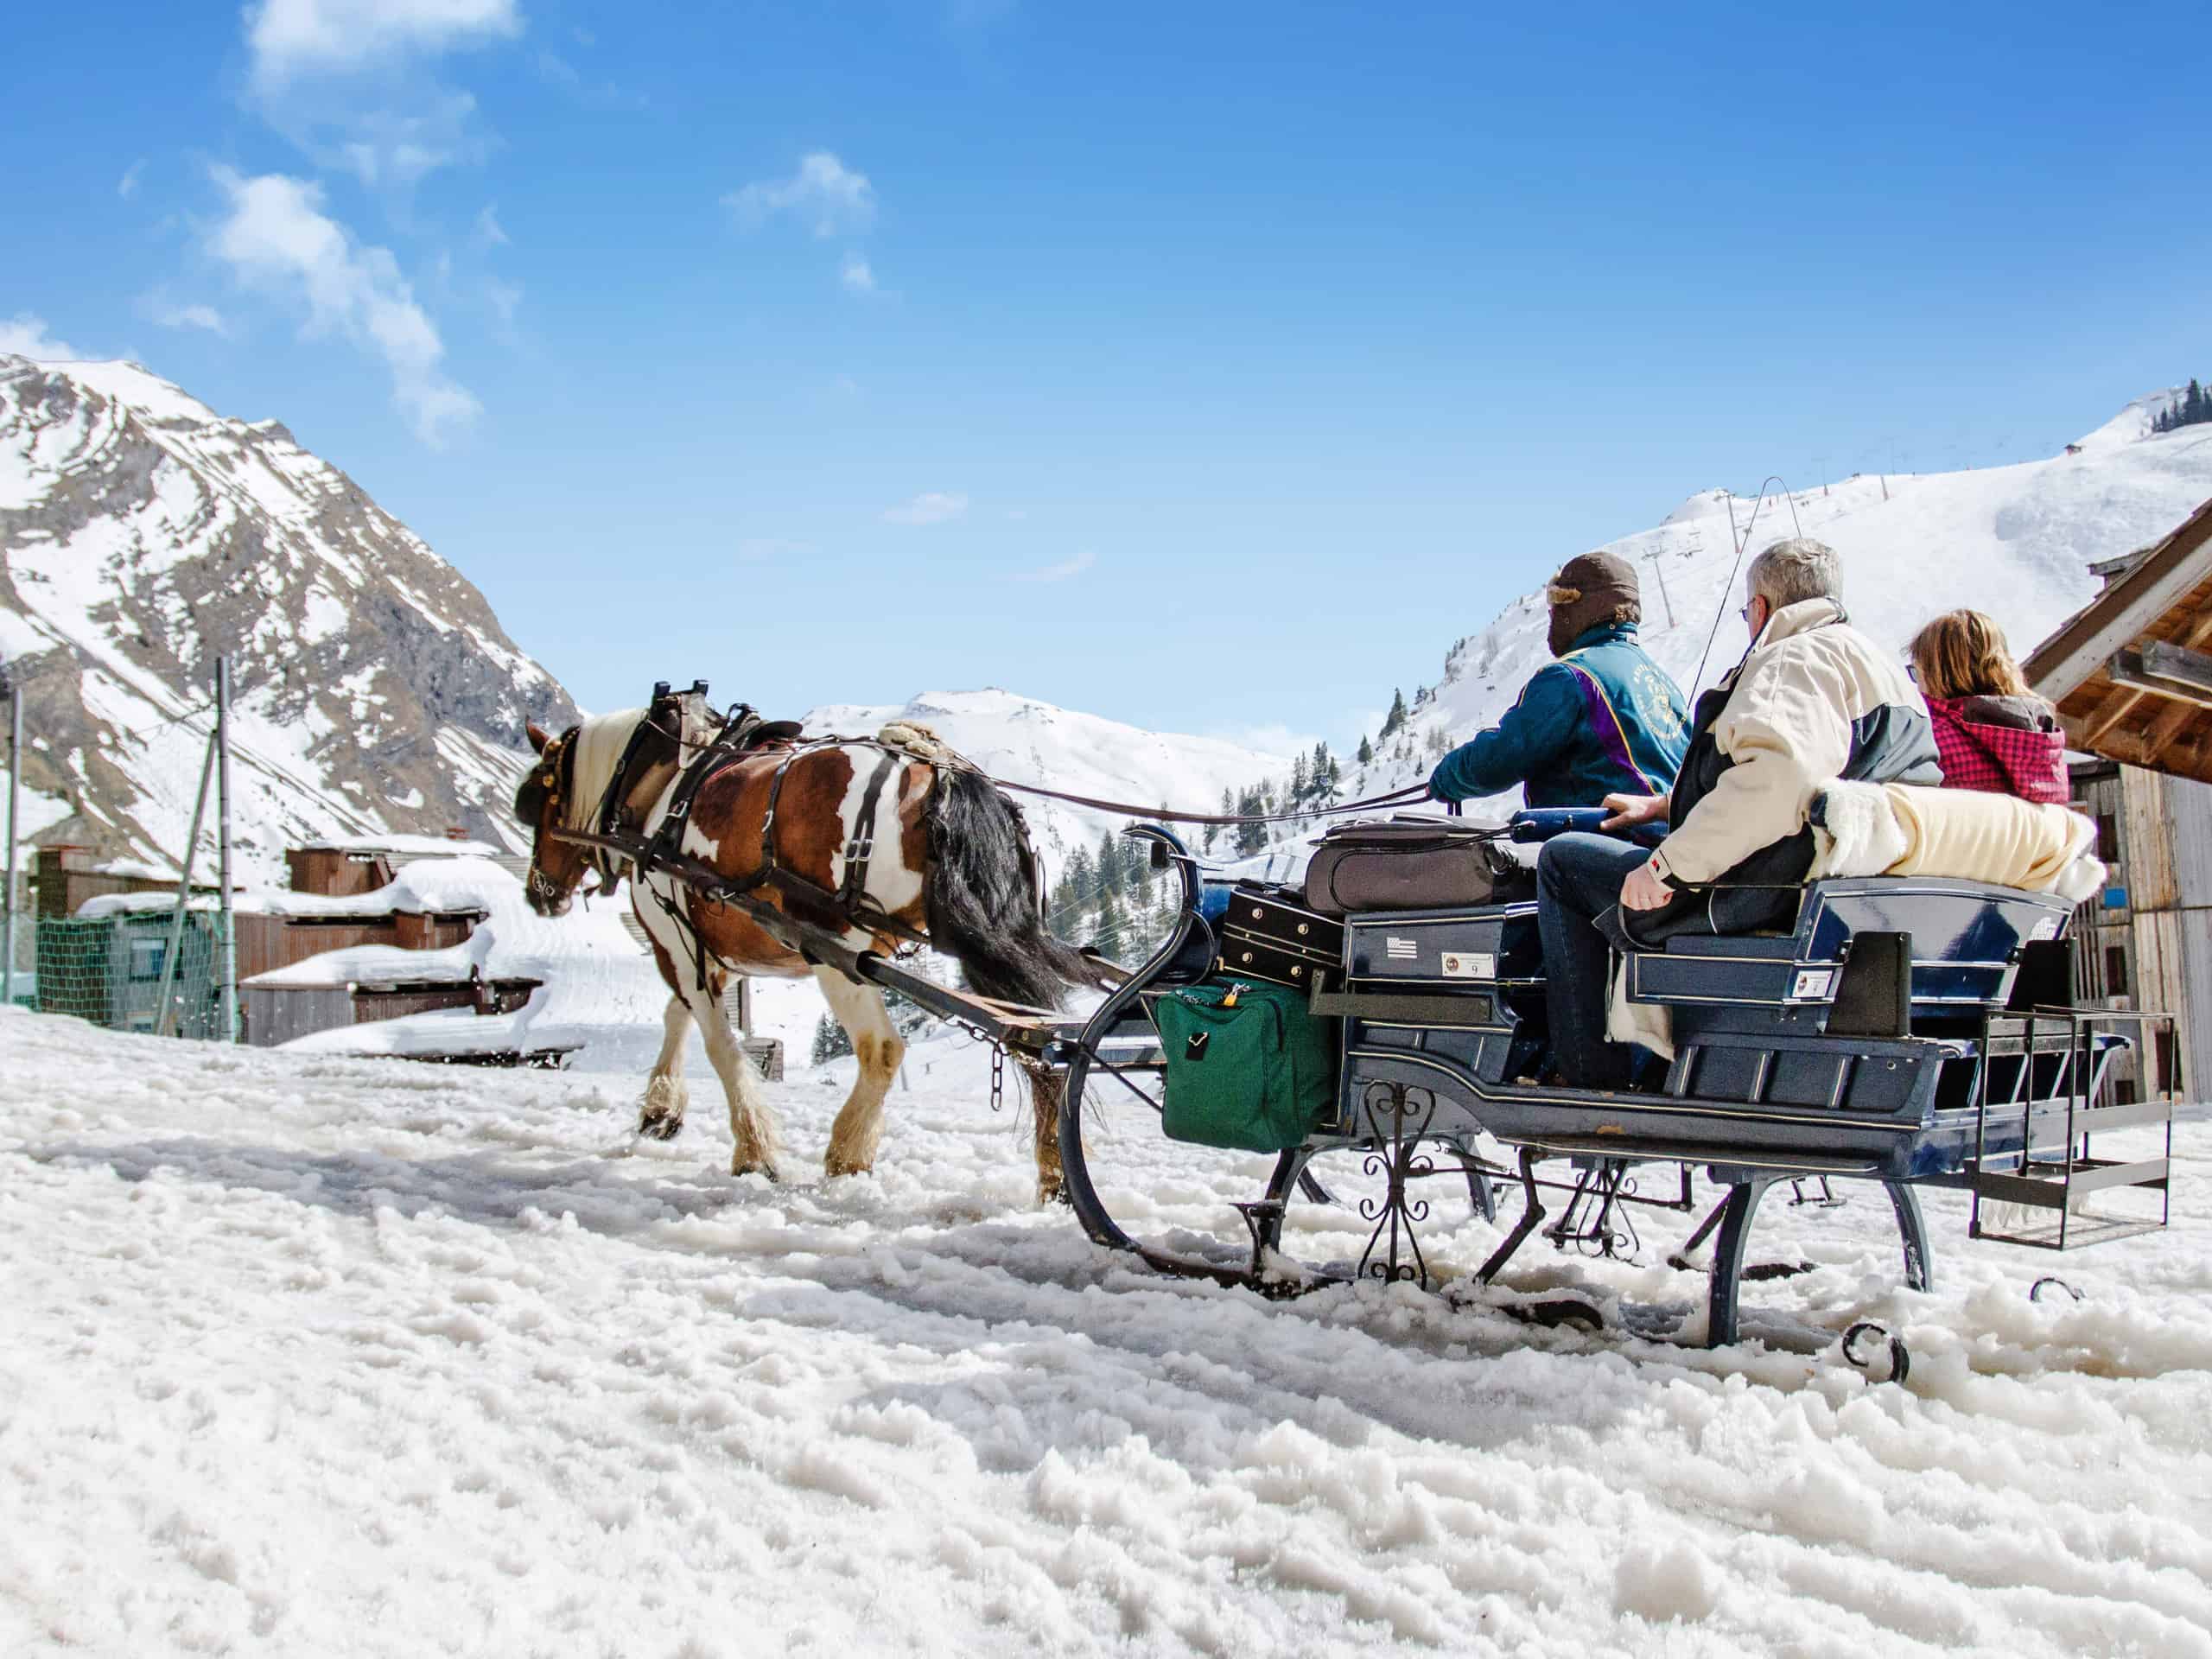 Winter Activities: Horse-drawn sleigh riding